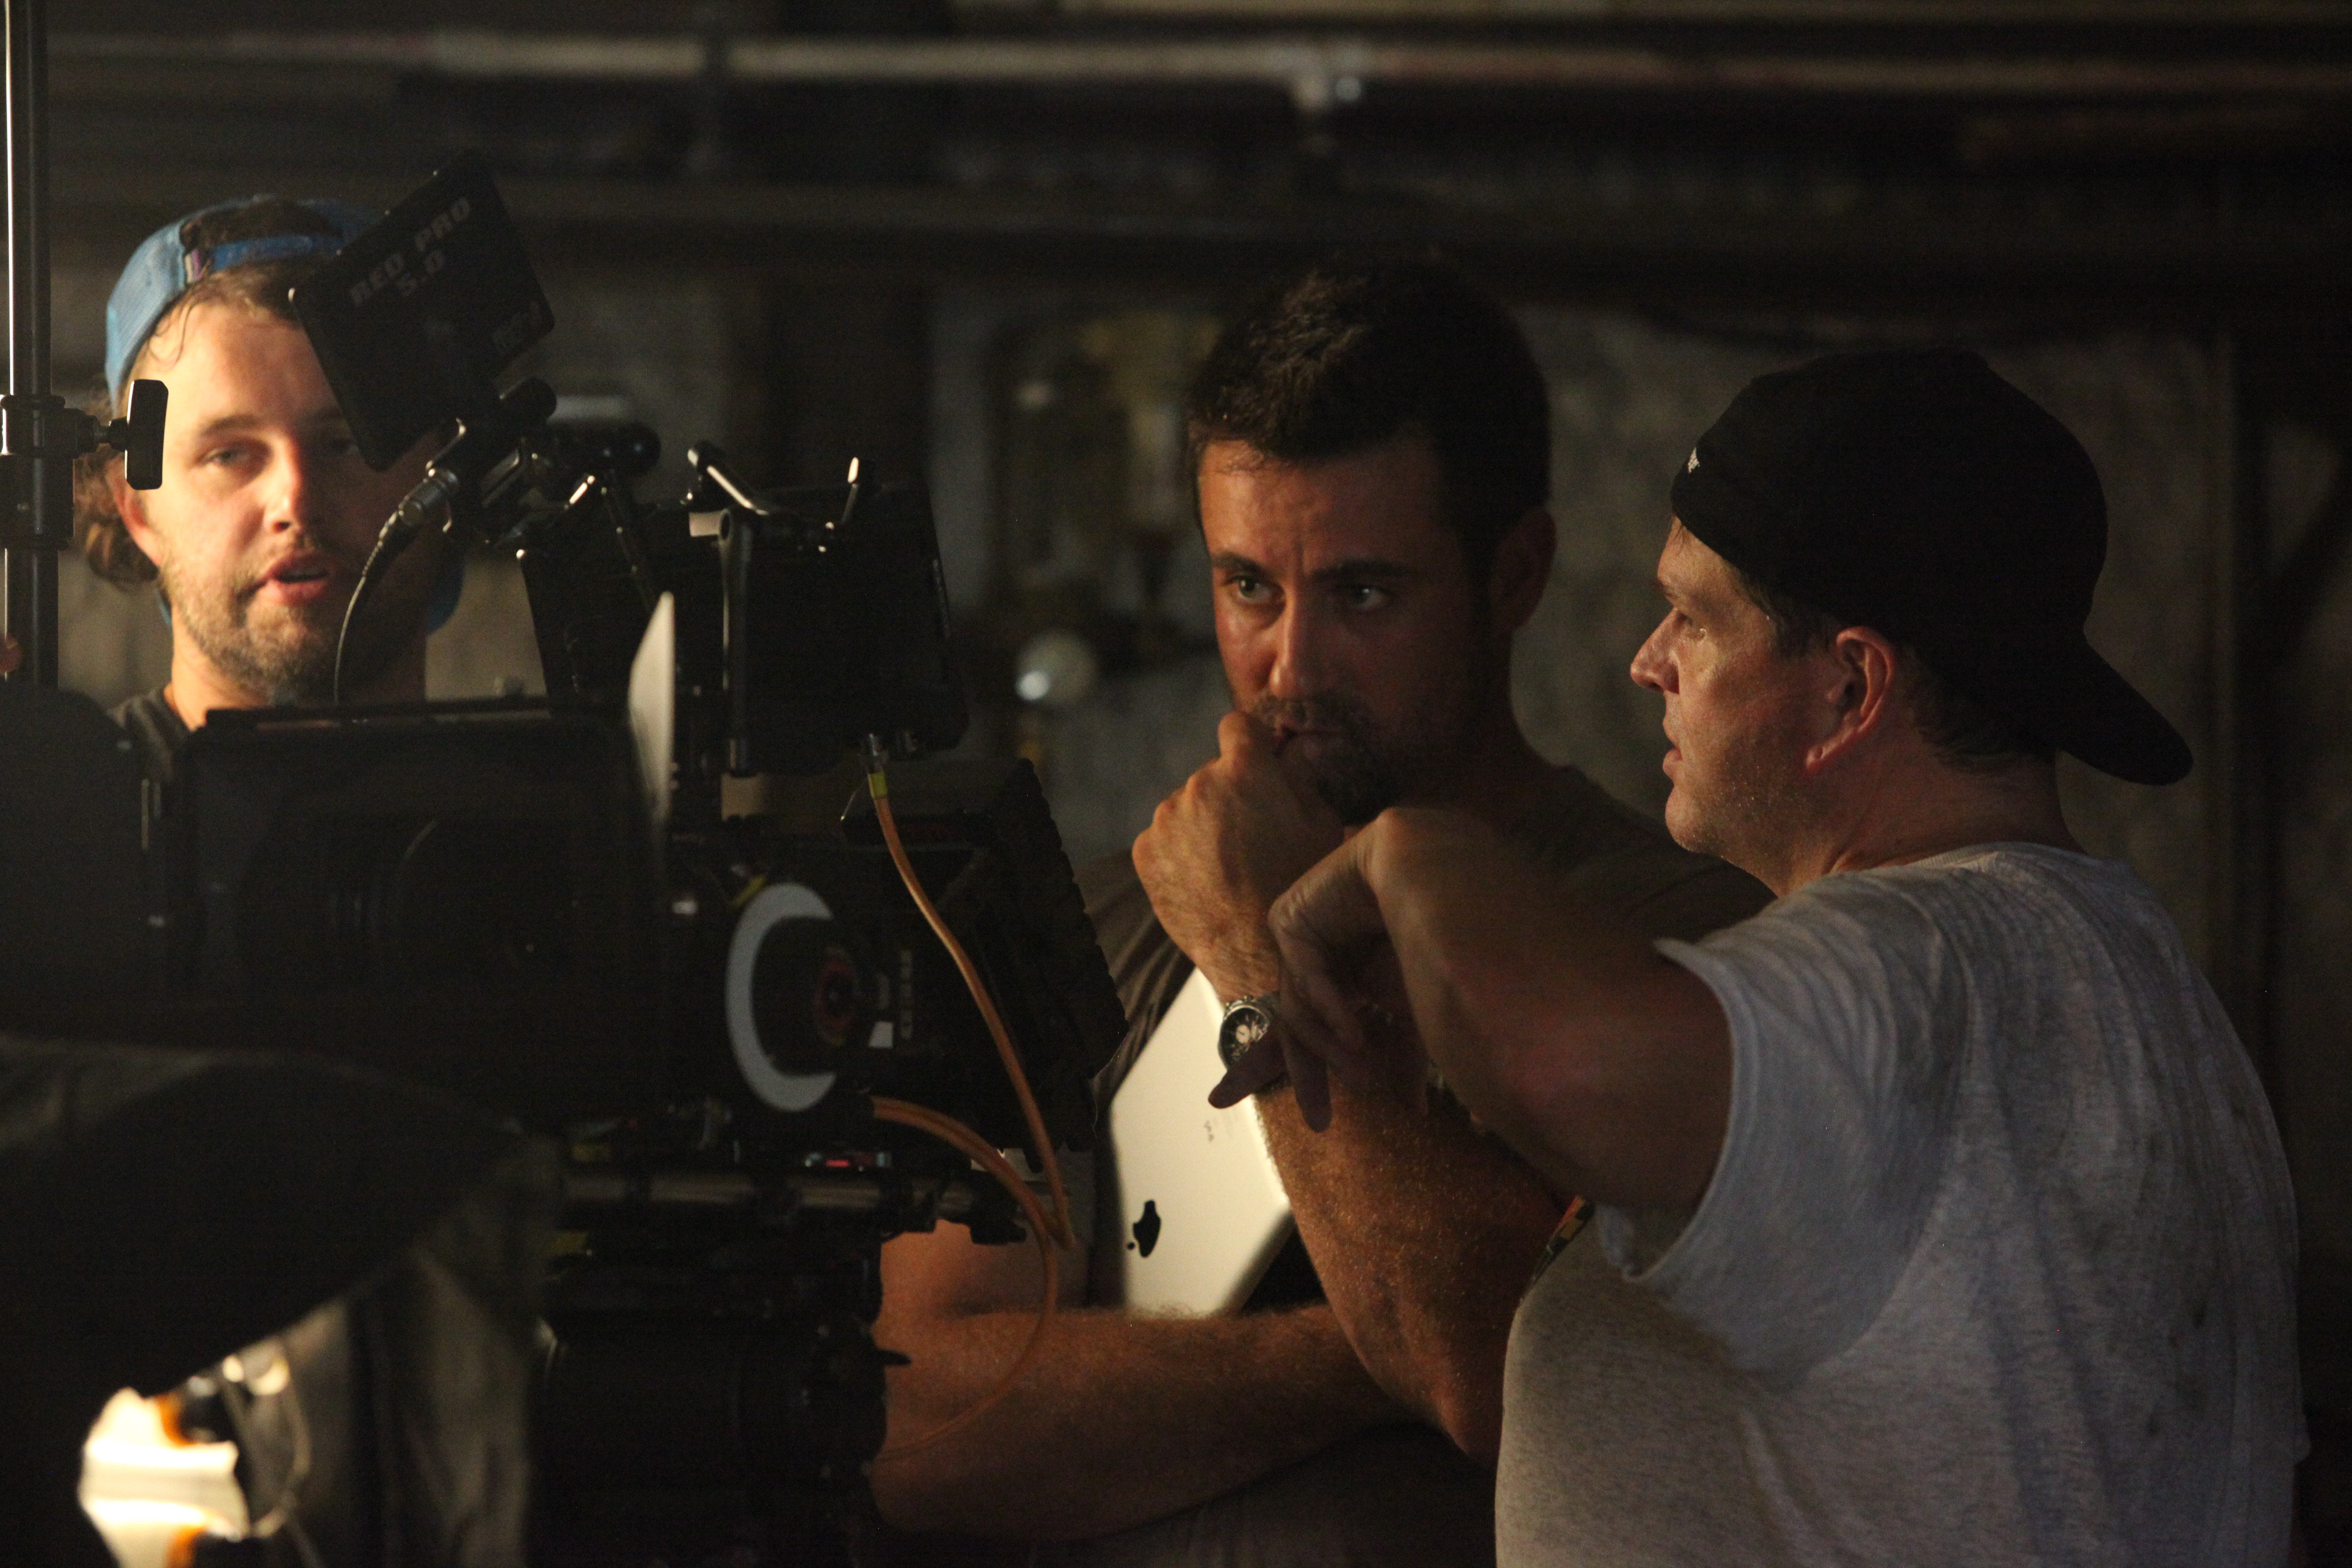 Directors Ron Lester and Major Dodge discuss the shot with DP Jason Burks